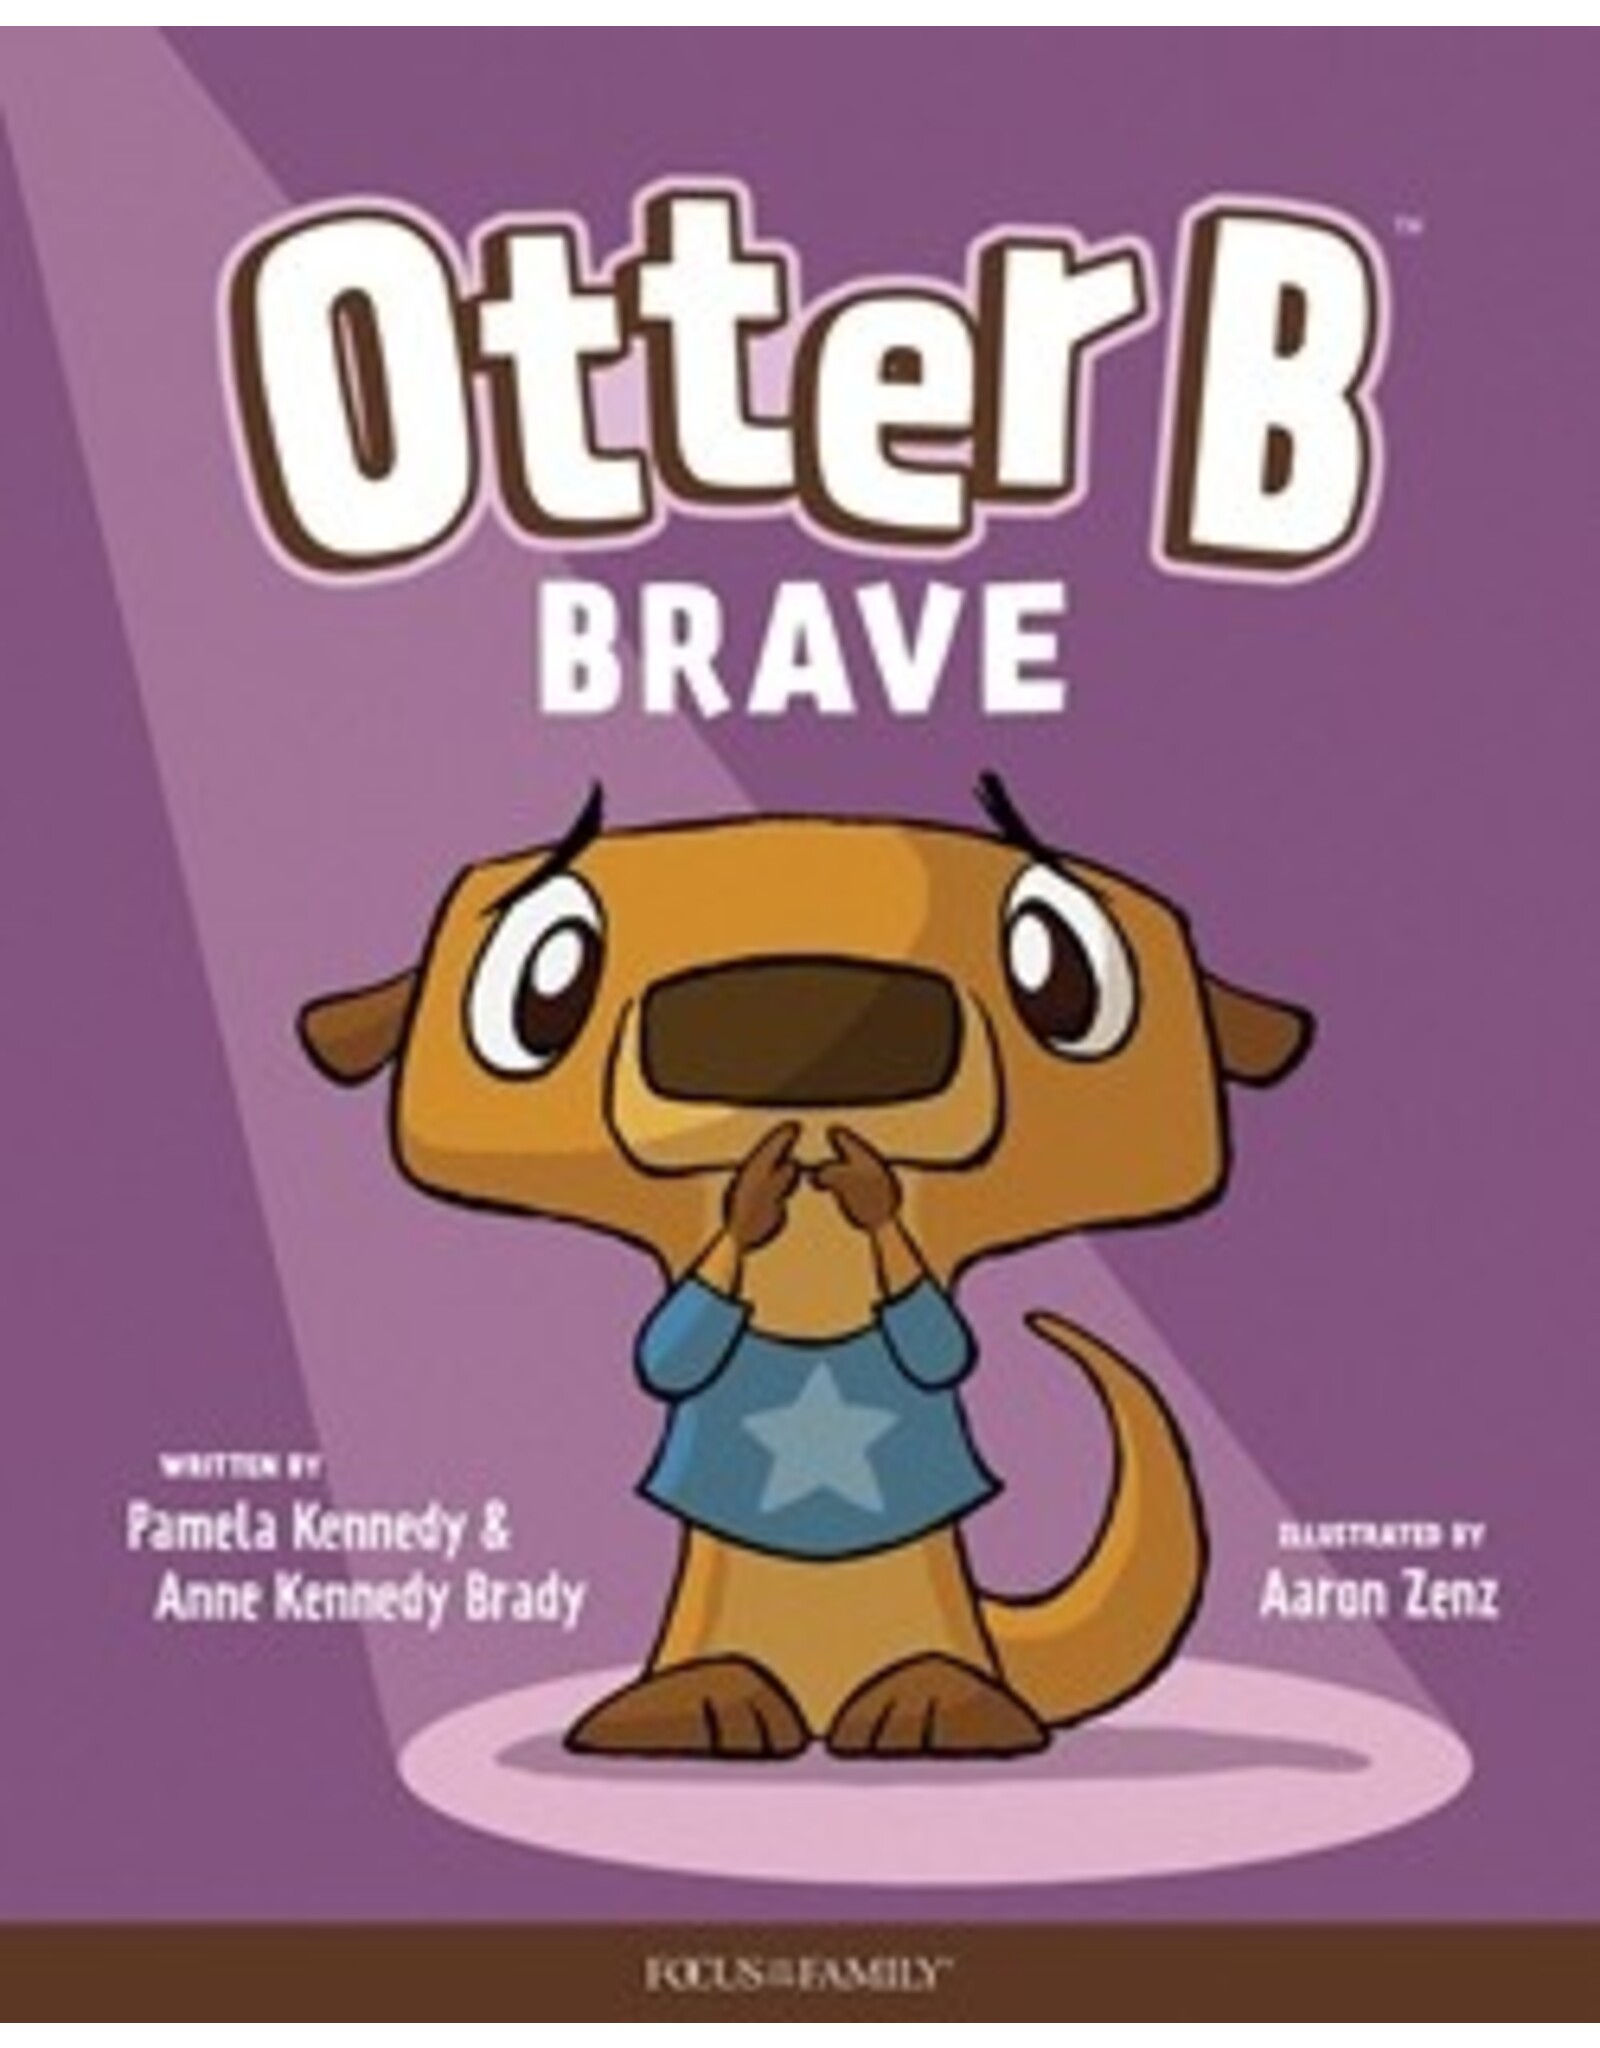 Focus on the Family Otter B - Brave  Hard Cover